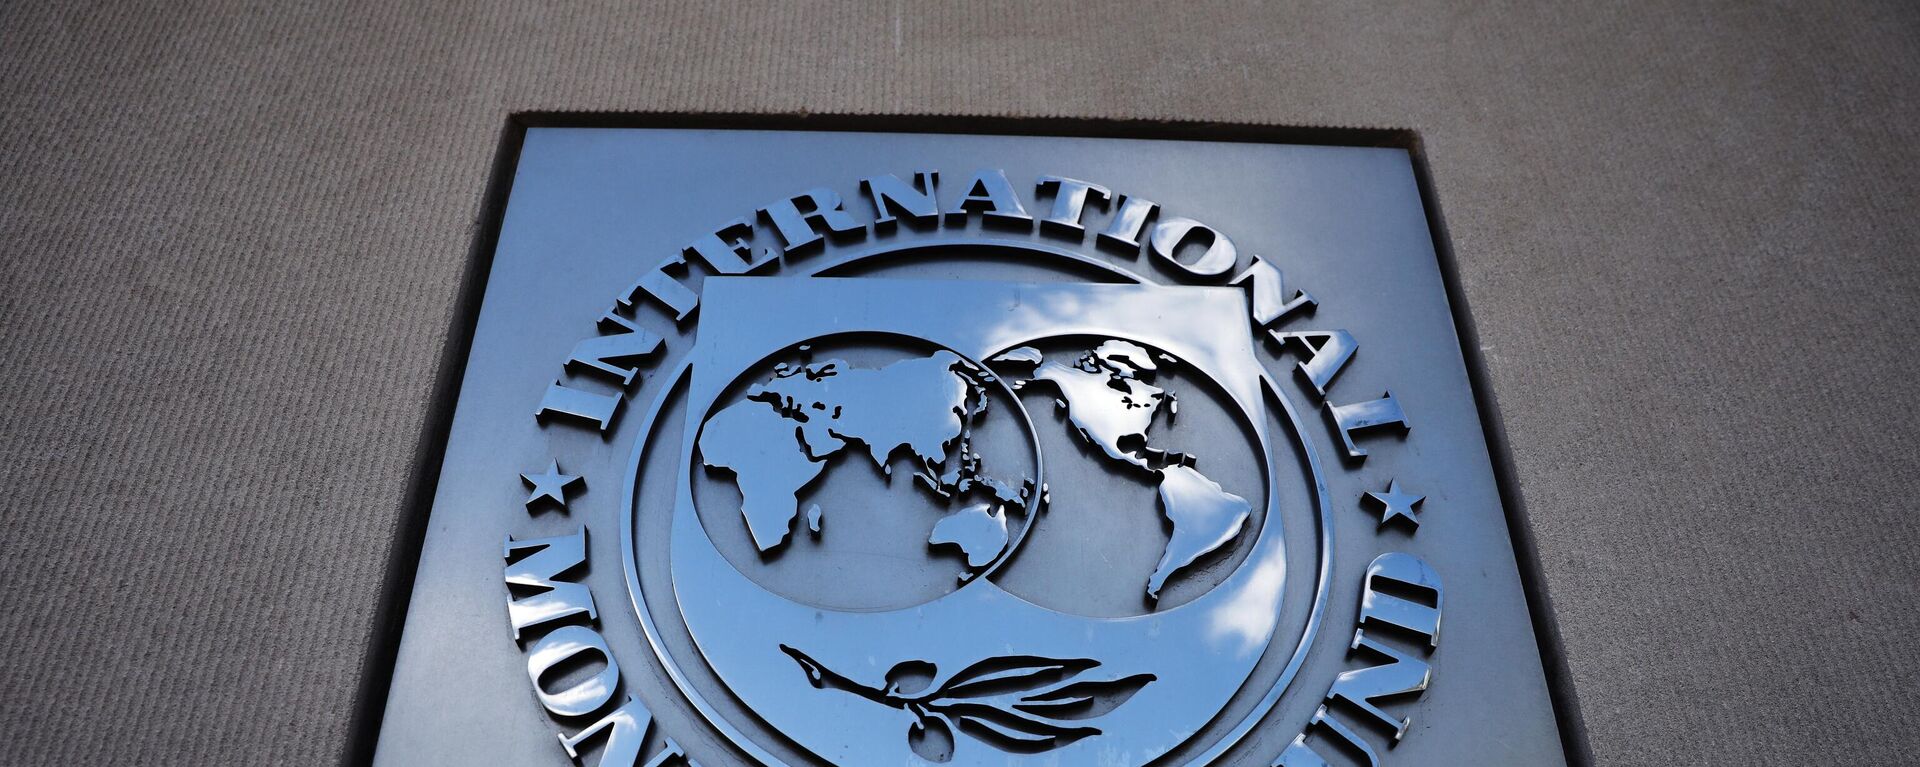 Табличка с логотипом Международного валютного фонда на стене здания МВФ. - Sputnik Таджикистан, 1920, 21.09.2021